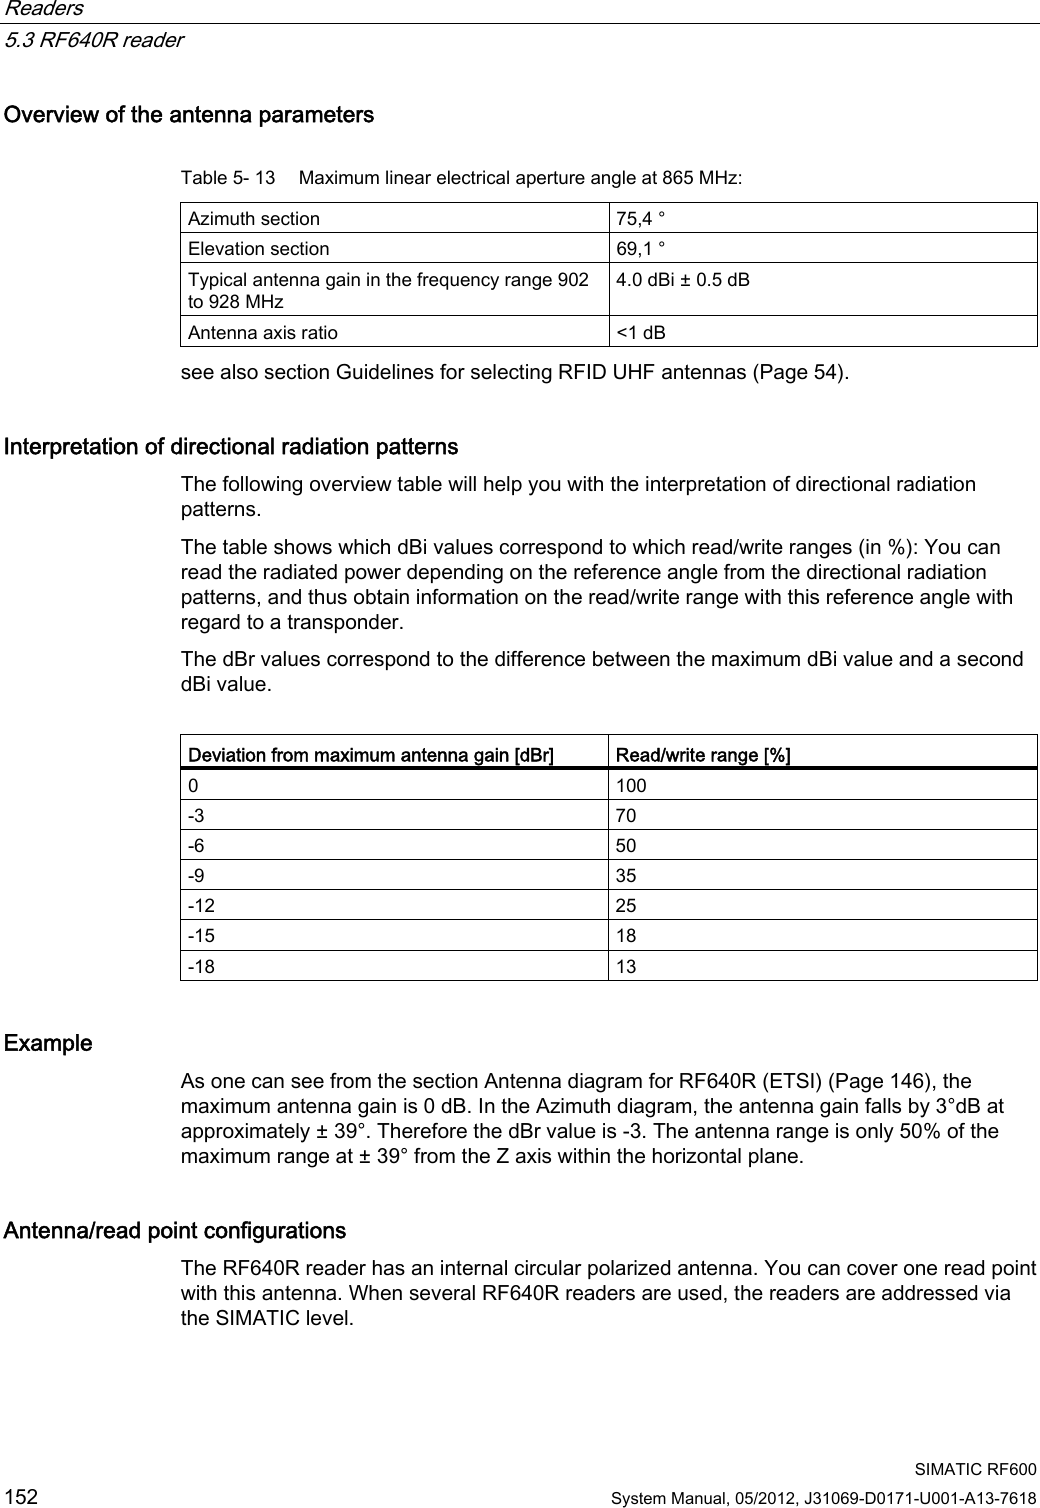 Page 54 of Siemens RF600R RFID UHF Reader User Manual SIMATIC RF600